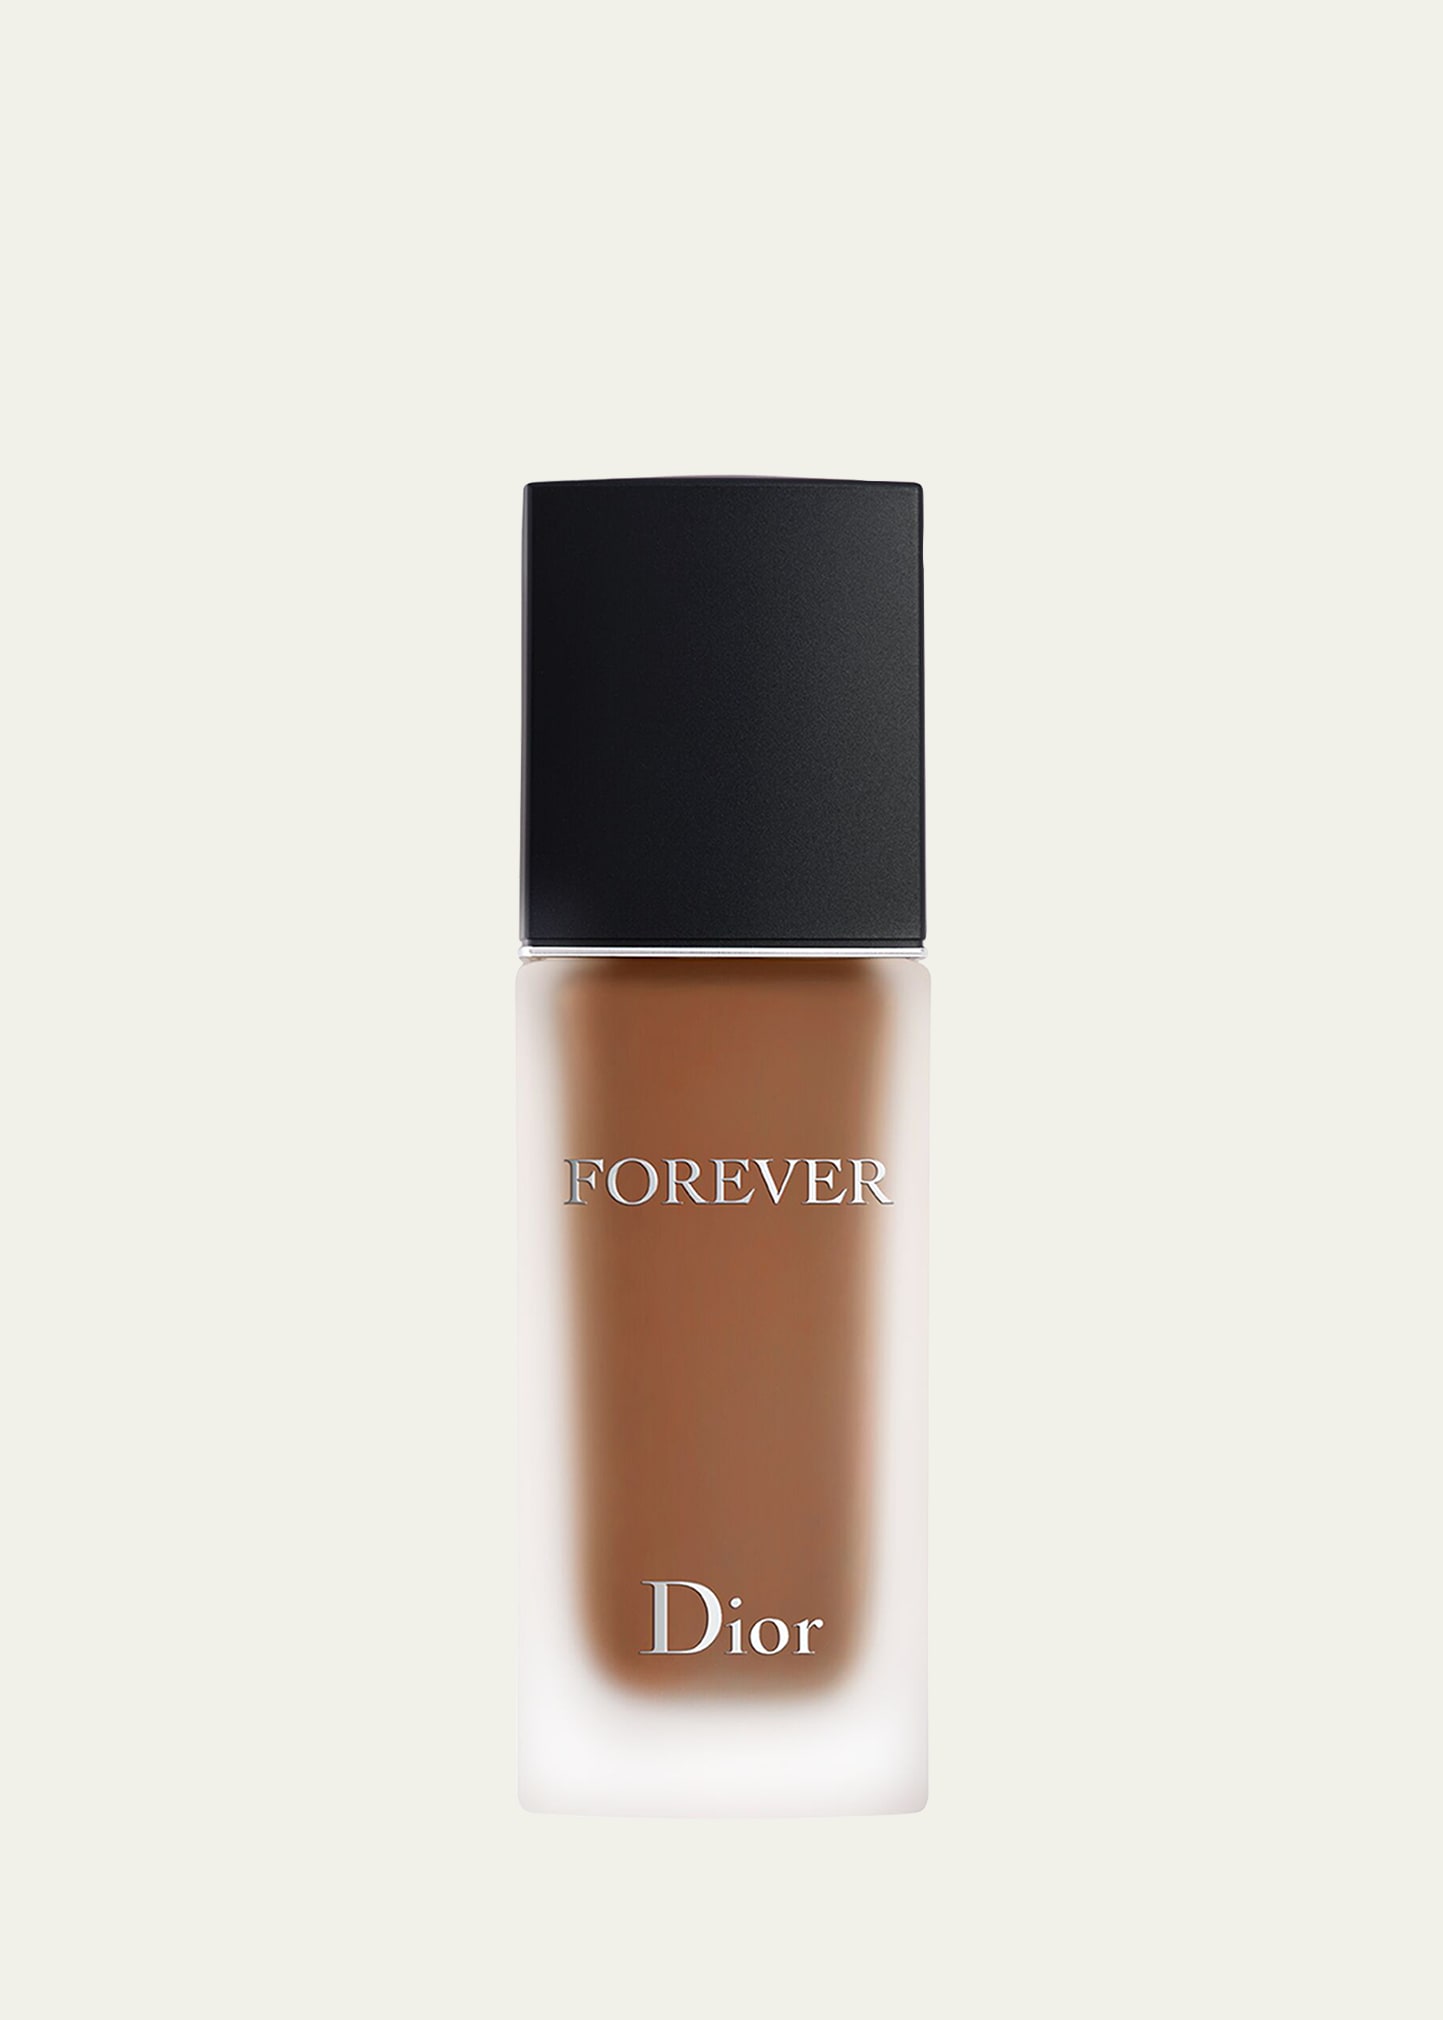 Dior 1 Oz. Forever Matte Skincare Foundation Spf 15 In 7 Neutral